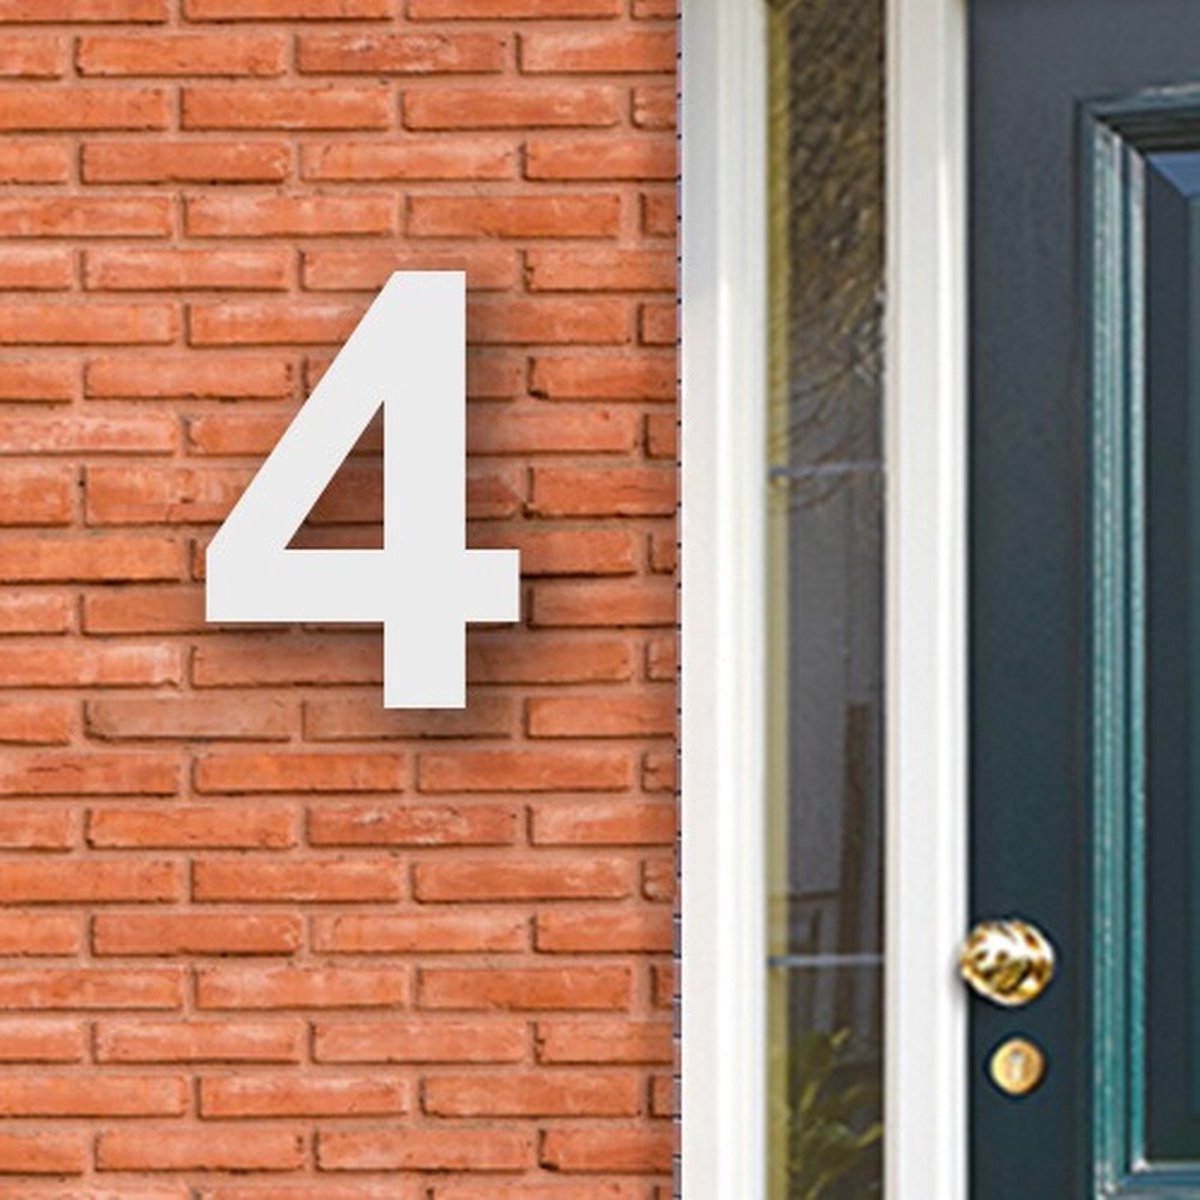 Huisnummer Acryl wit, cijfer 4 Hoogte 16cm - Huisnummers - Huisnummer wit - Huisnummer modern - Gratis verzending!